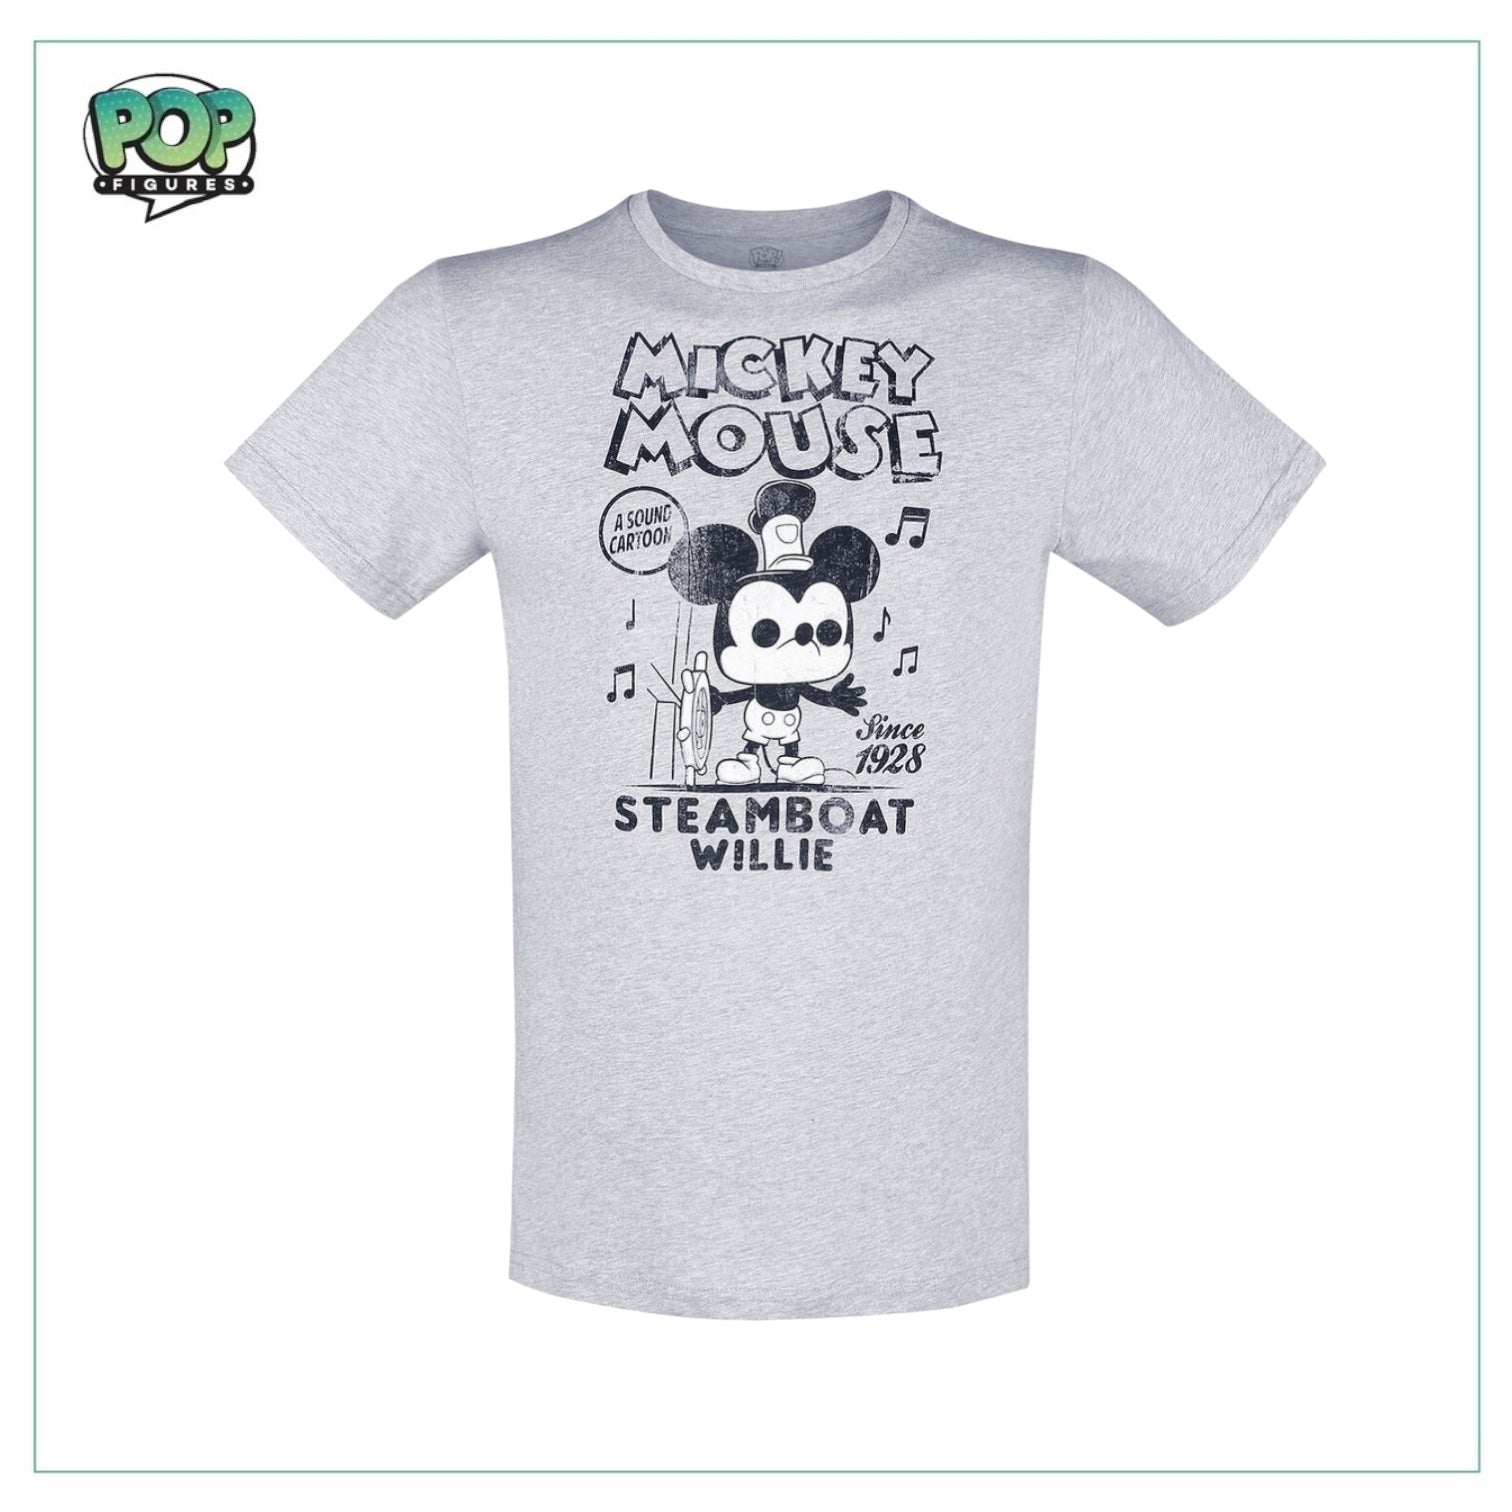 Steamboat Willie - Funko T-Shirt